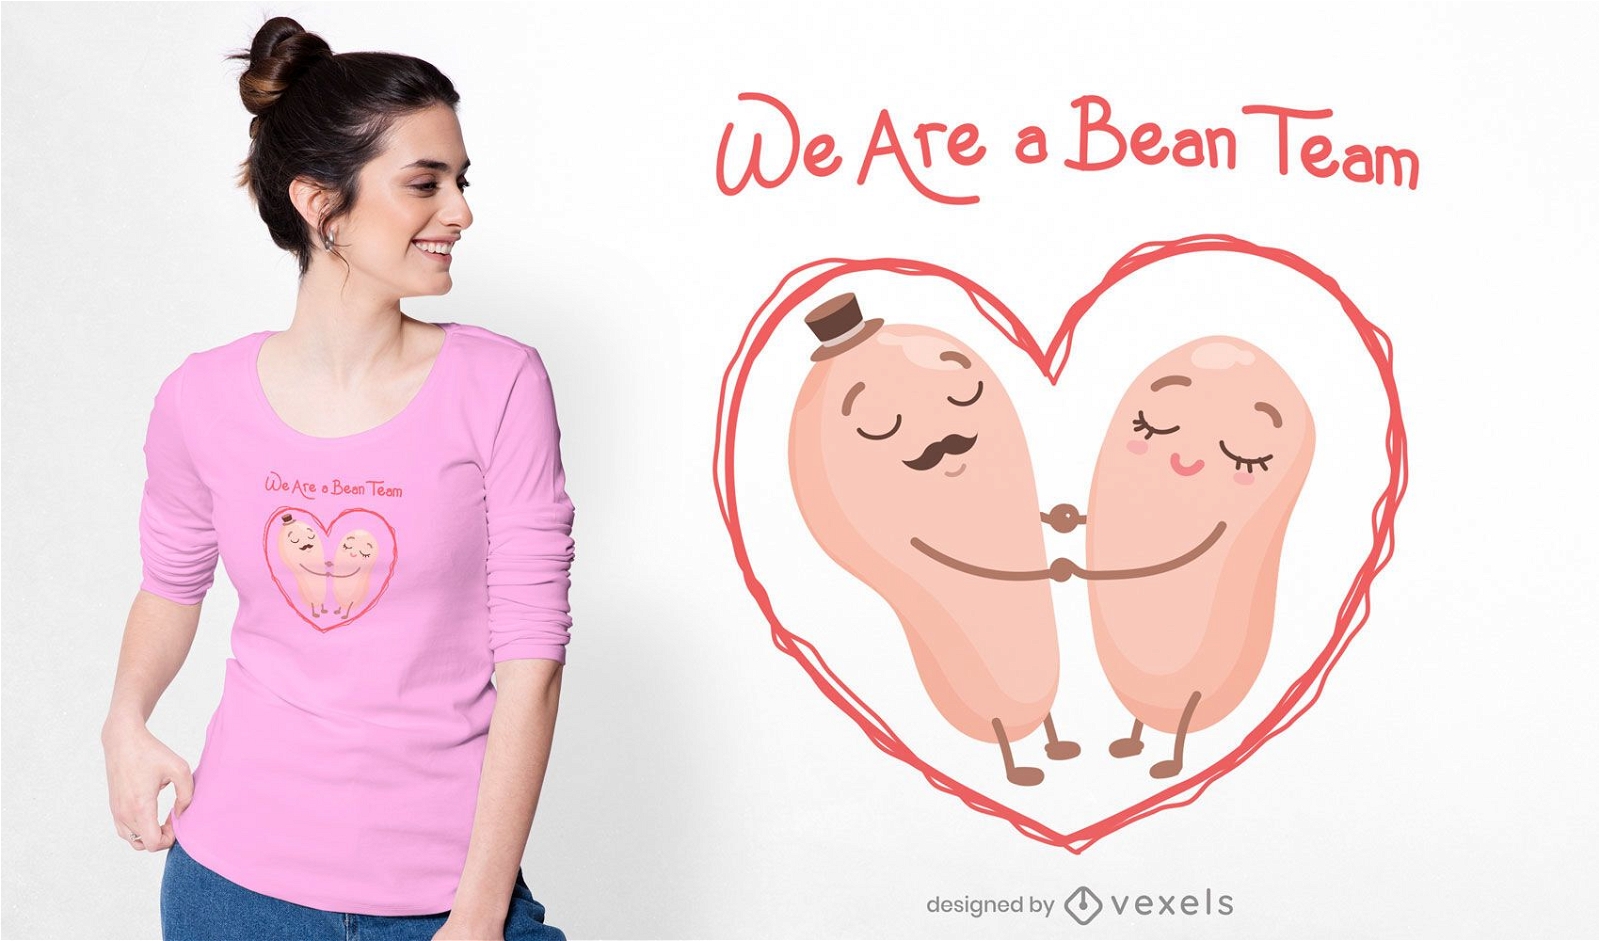 A bean team t-shirt design